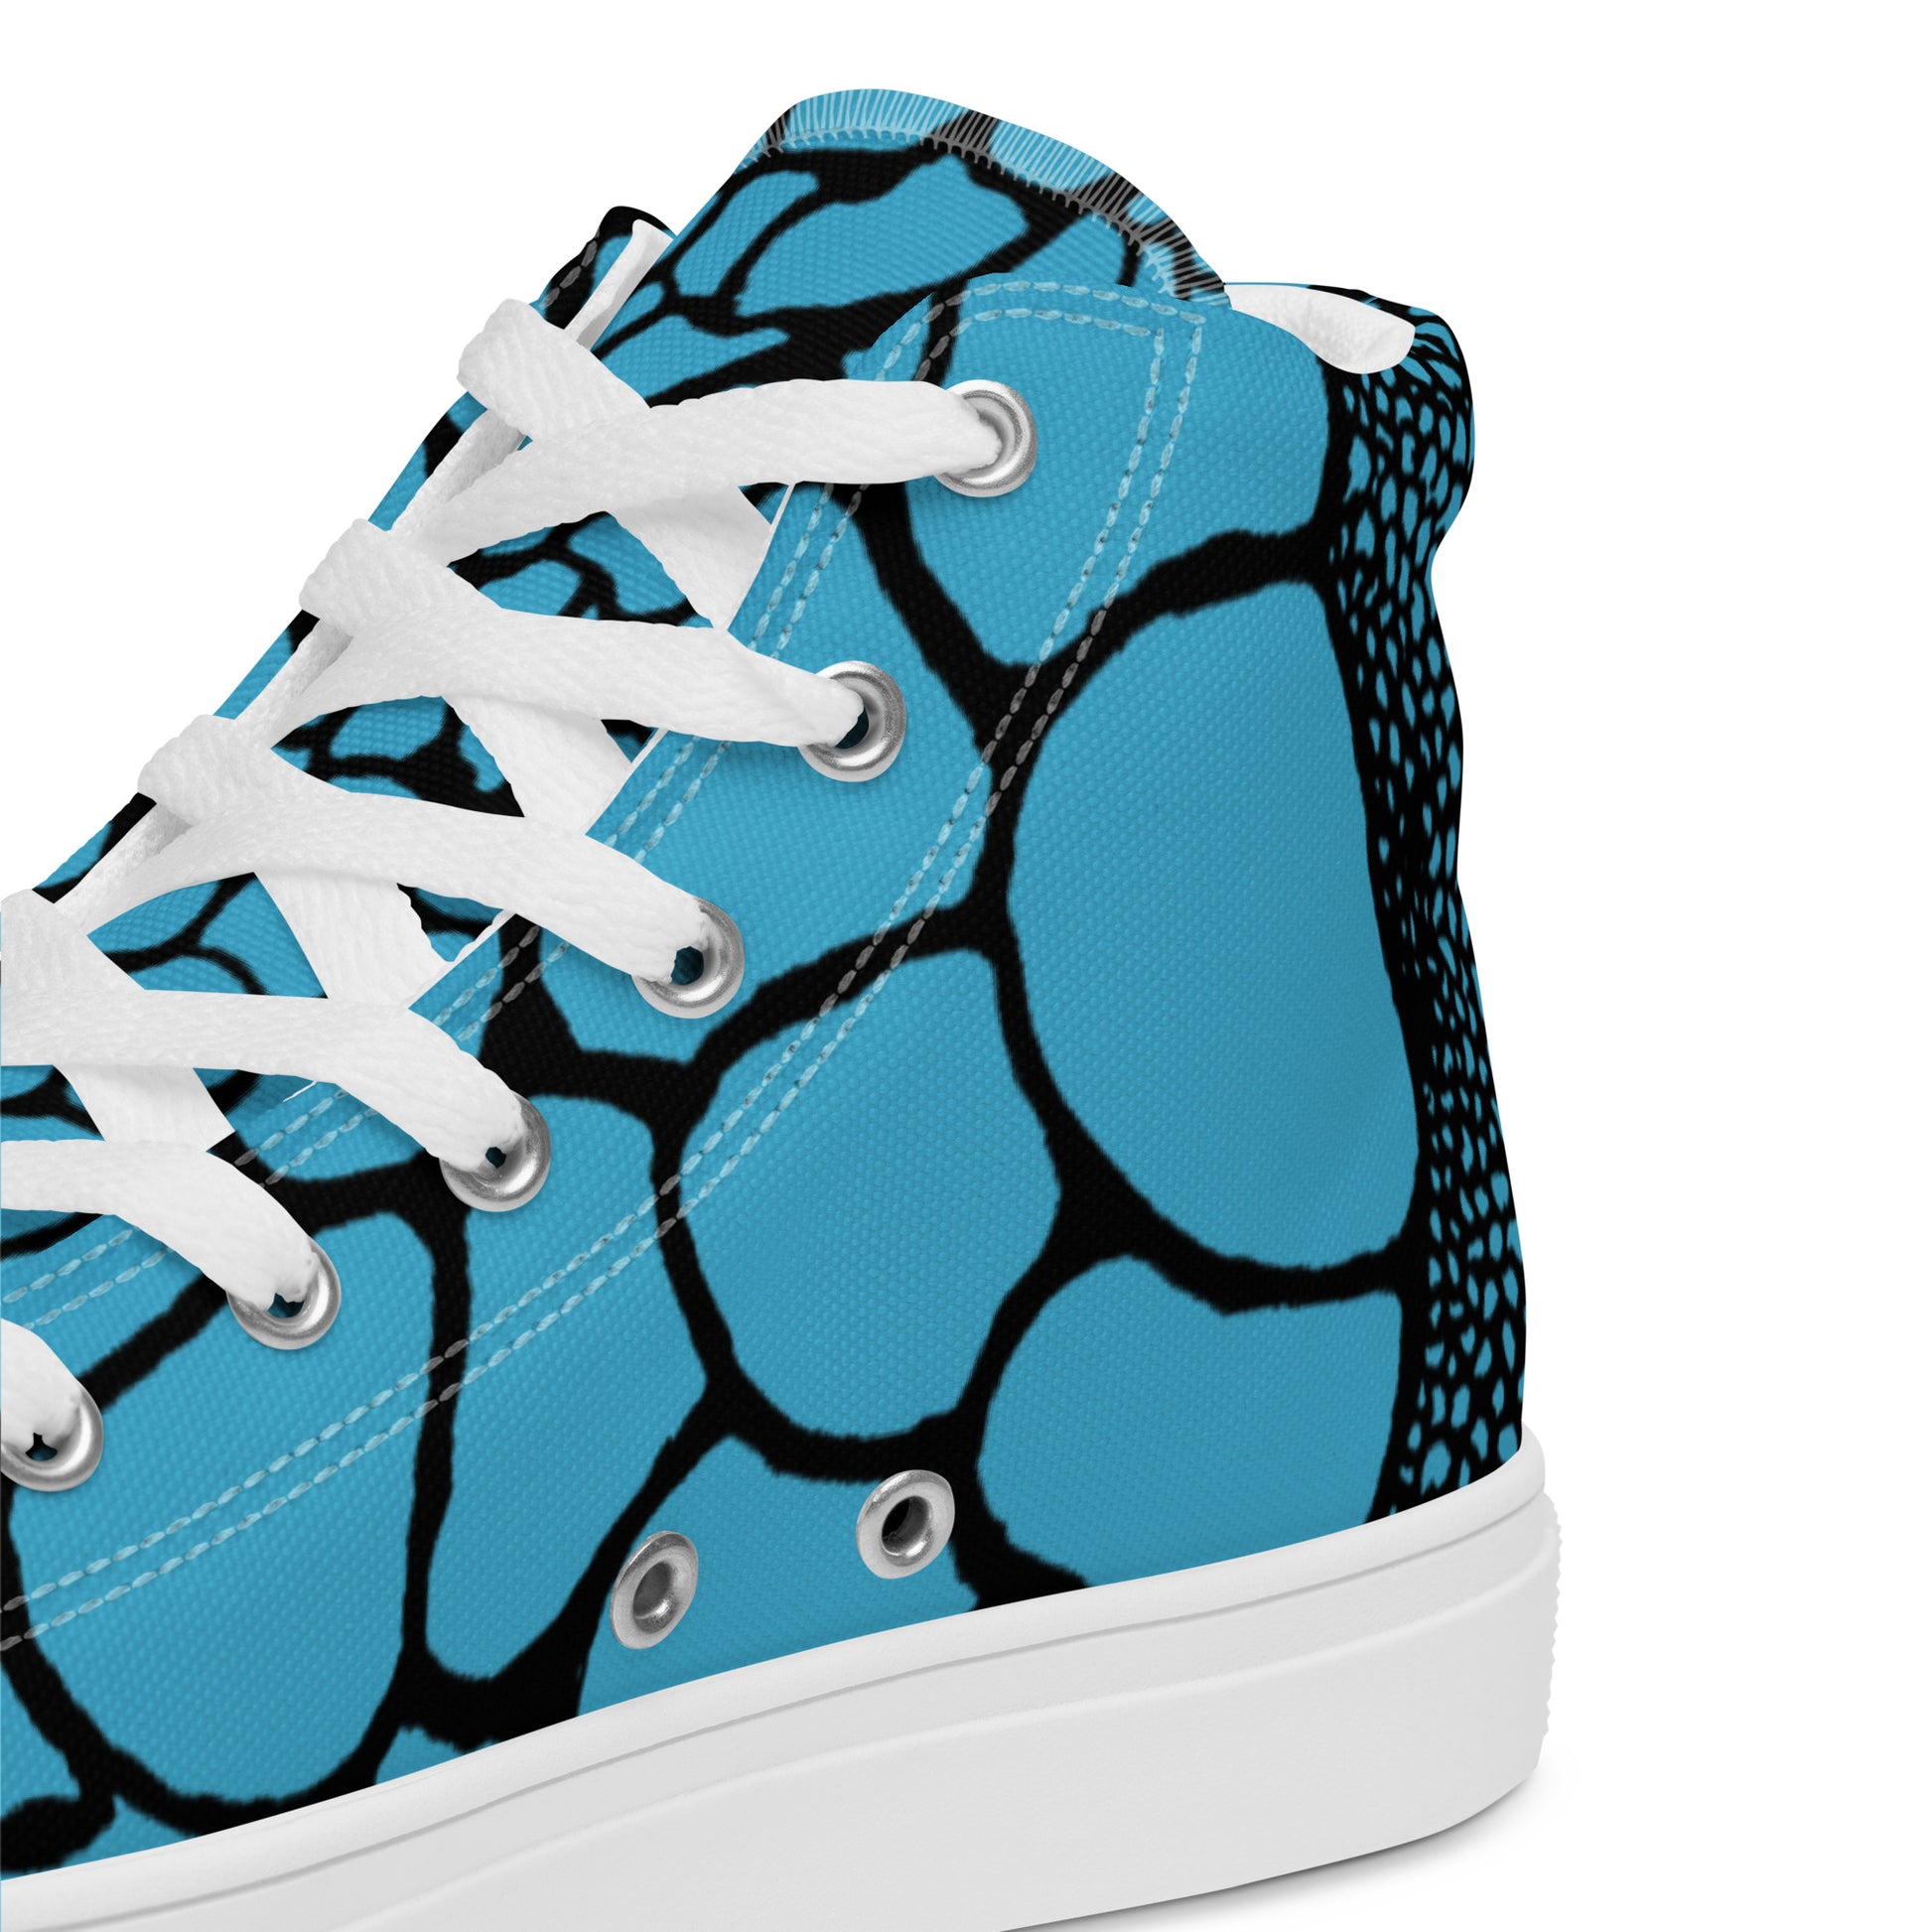 Blue star pattern & prints lace up shoe sneaker